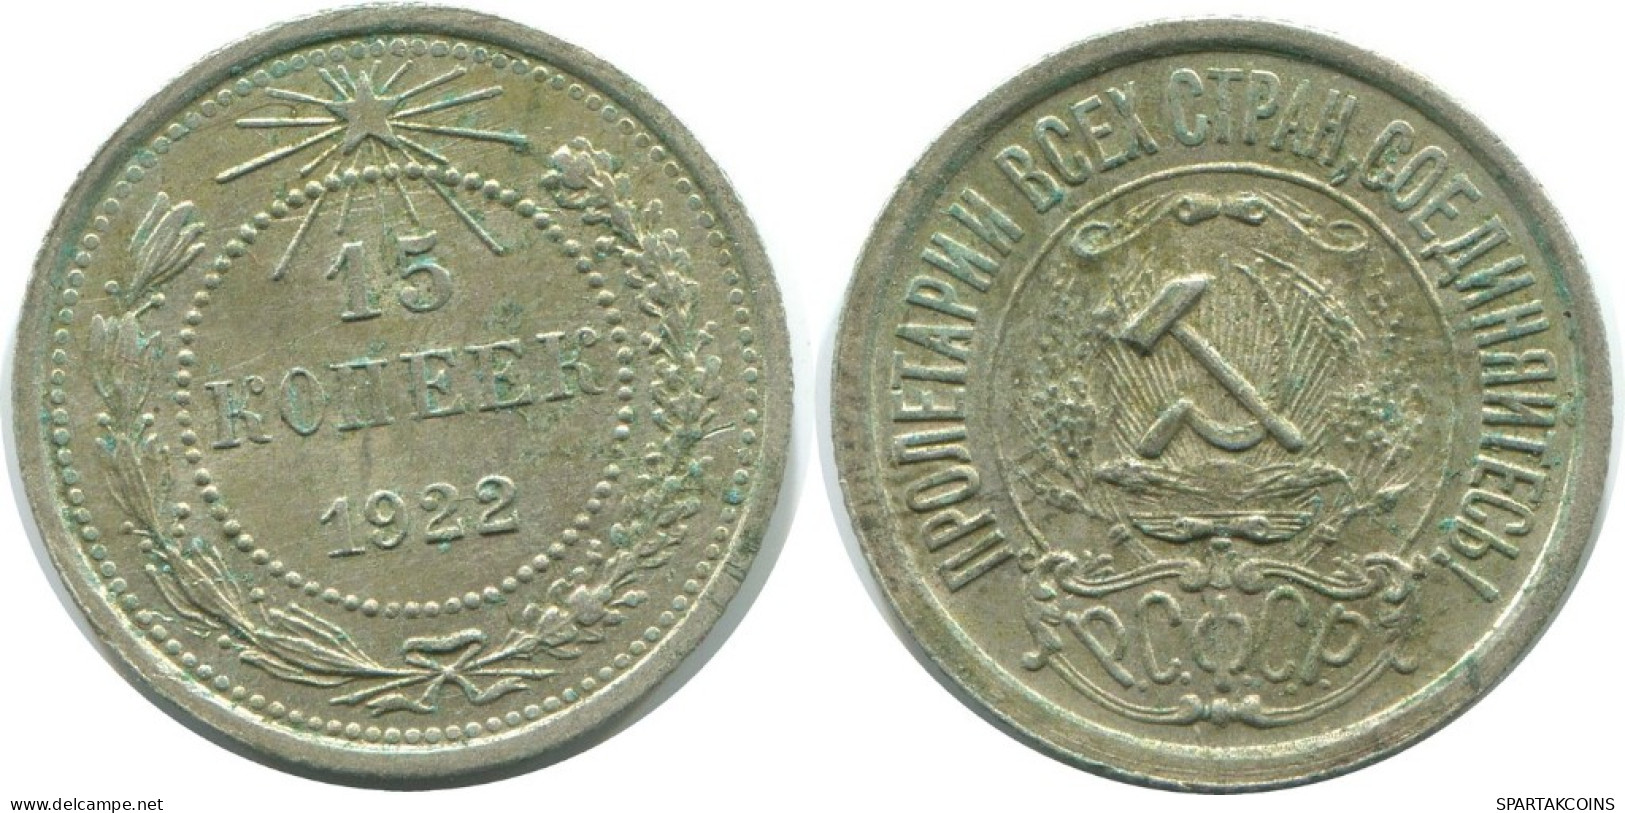 15 KOPEKS 1922 RUSSIA RSFSR SILVER Coin HIGH GRADE #AF190.4.U.A - Rusia